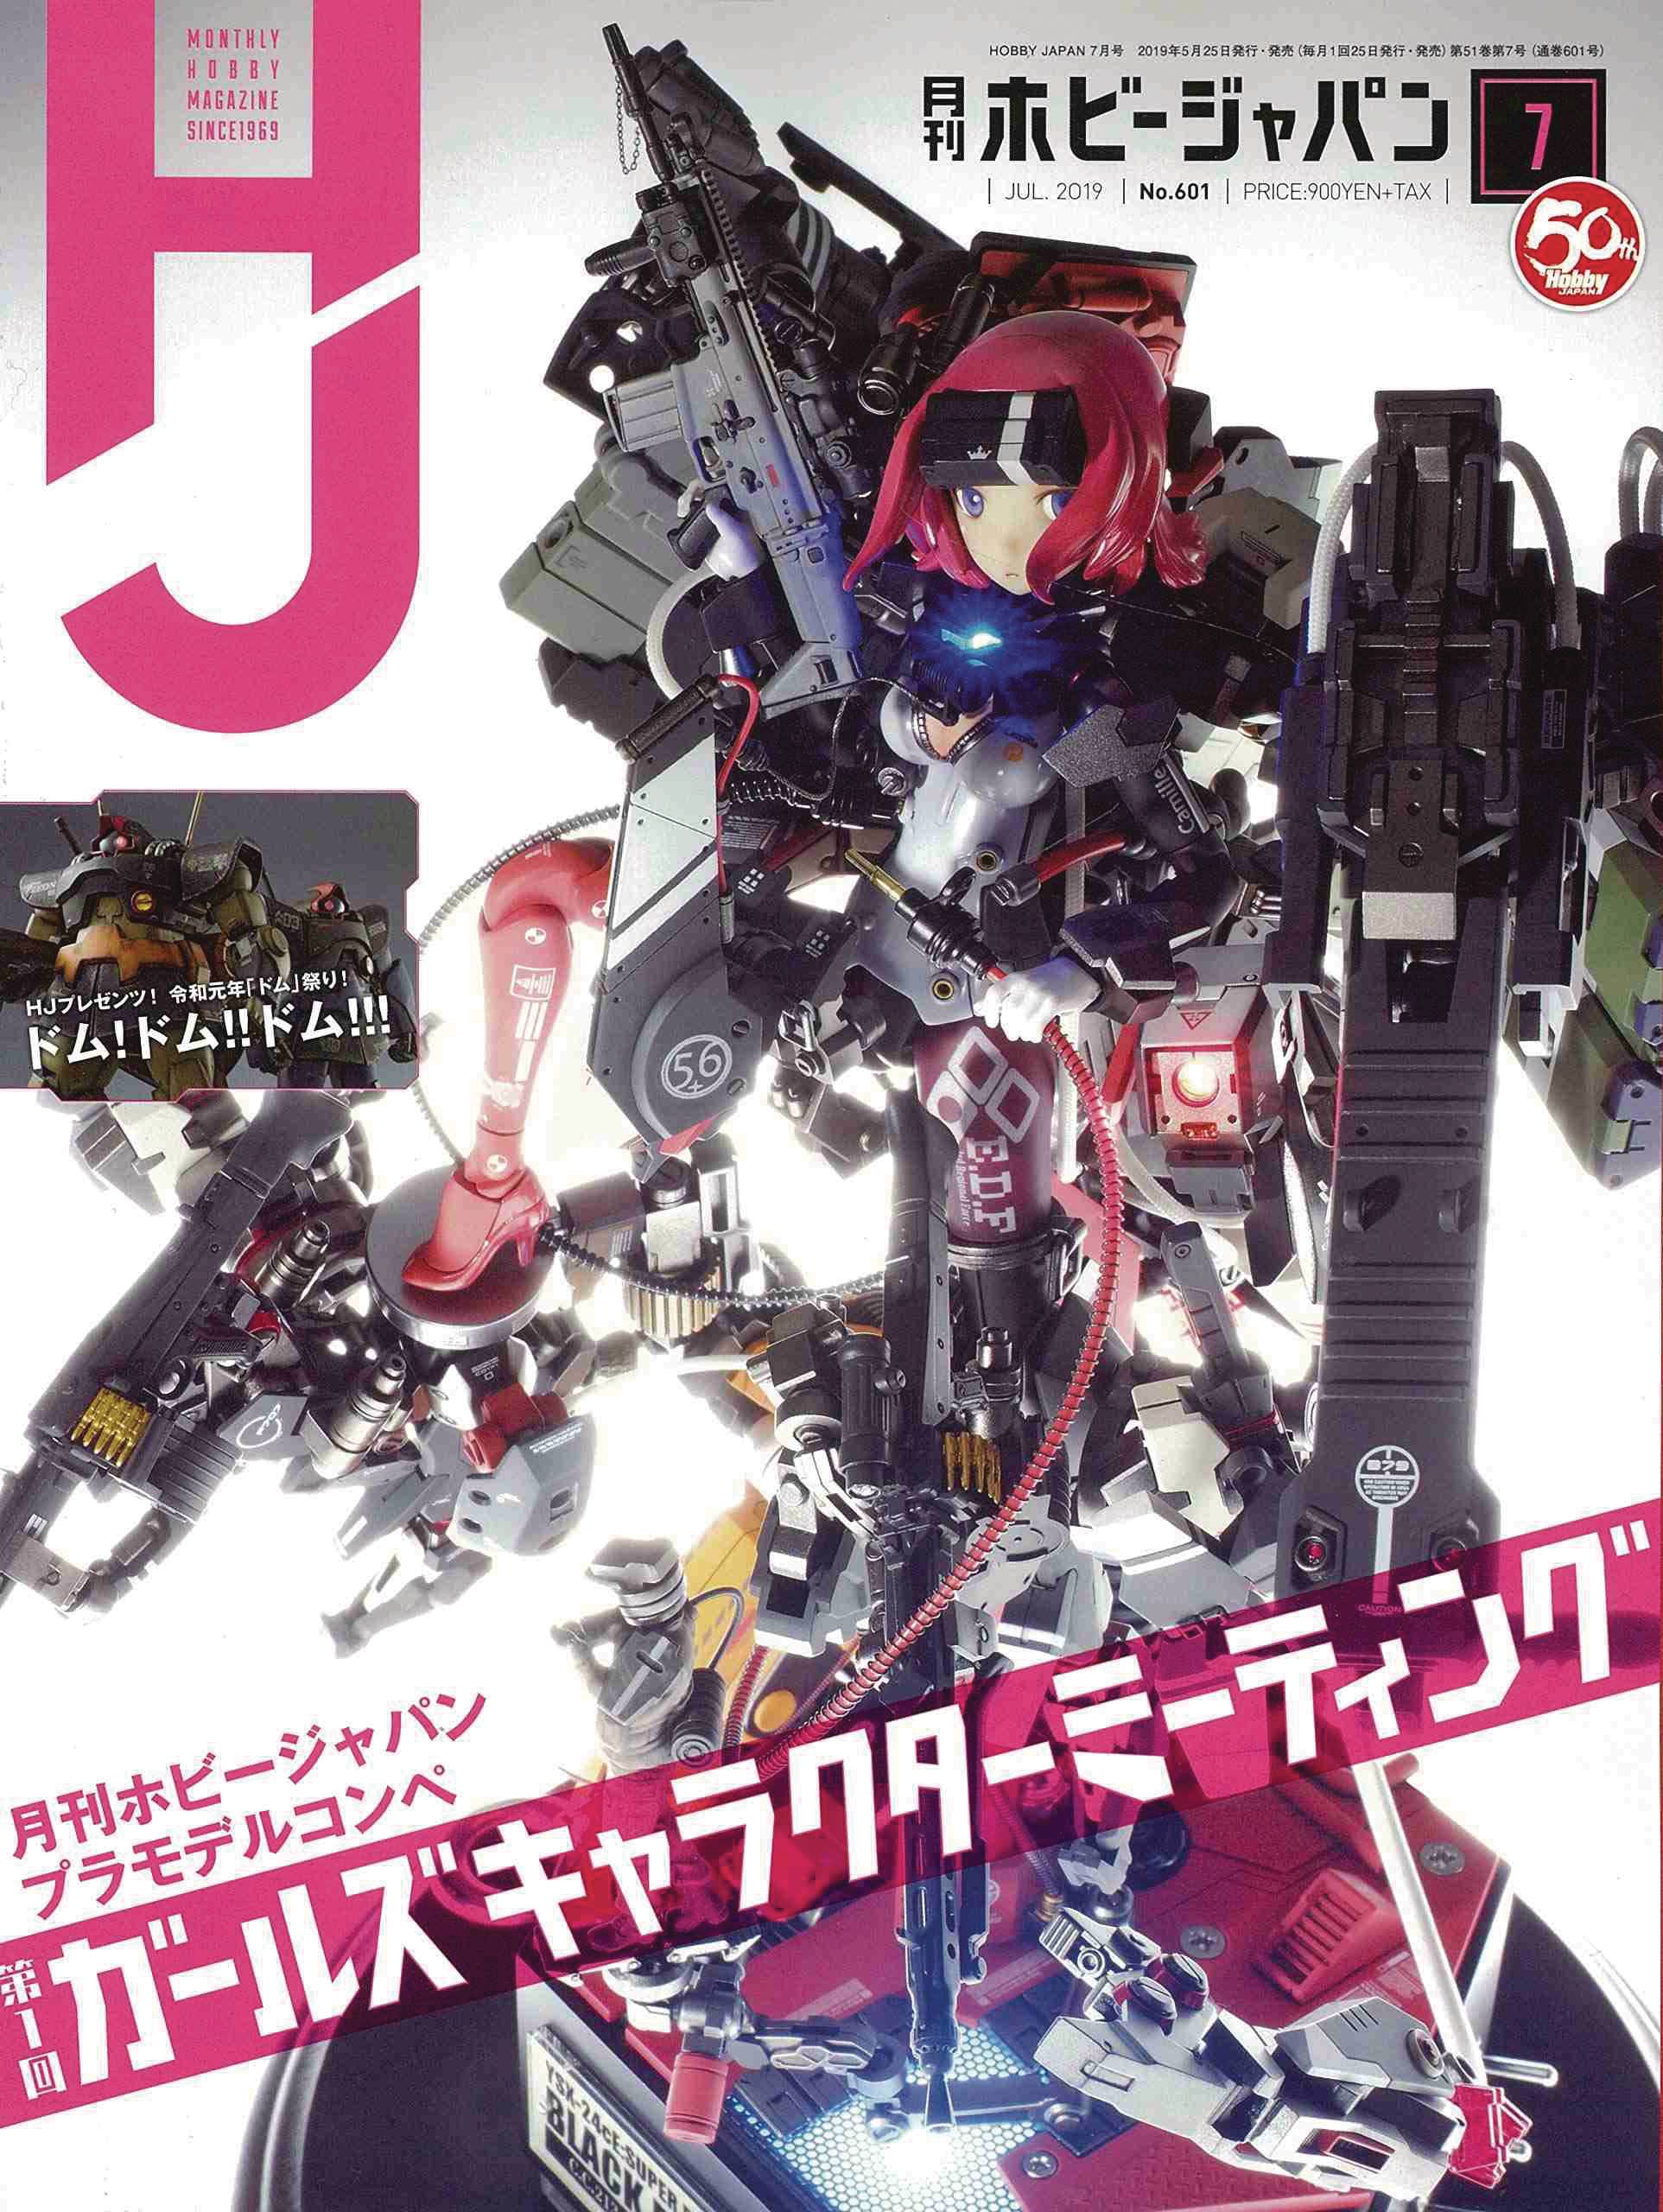 Details about   Hobby Japan Magazine February 2020 w/ BONUS OBSOLETE MODEROID 1/35 Model kit 